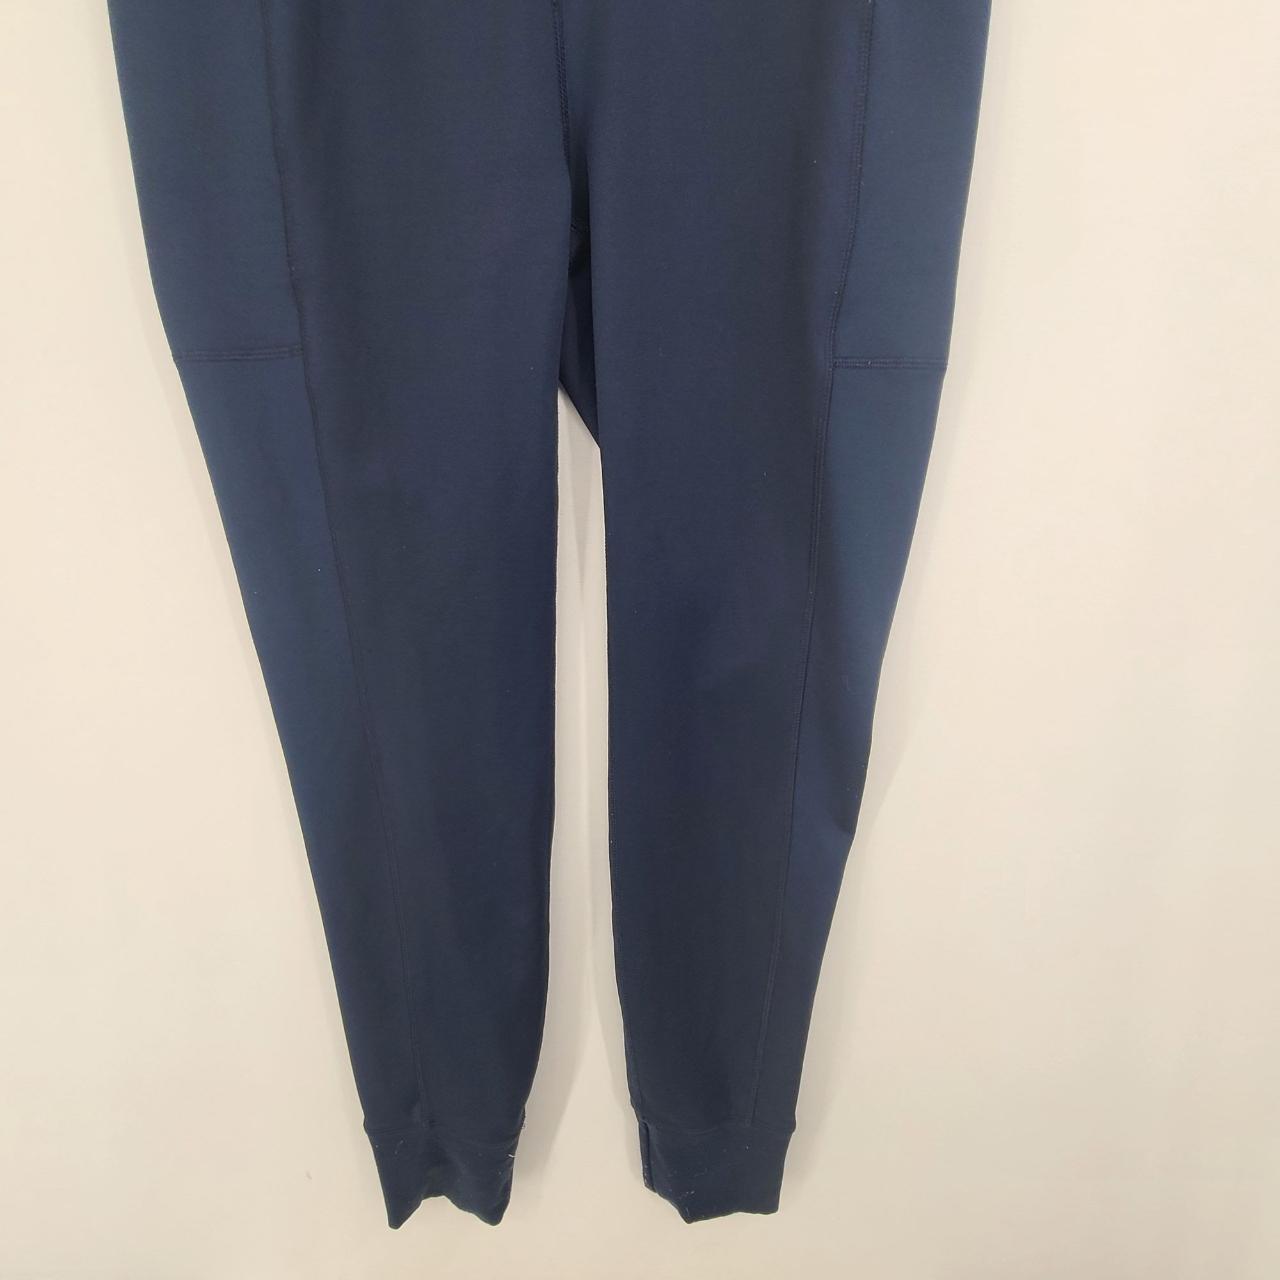 Spyder Active Women's Athletic Pants Navy Blue Size... - Depop